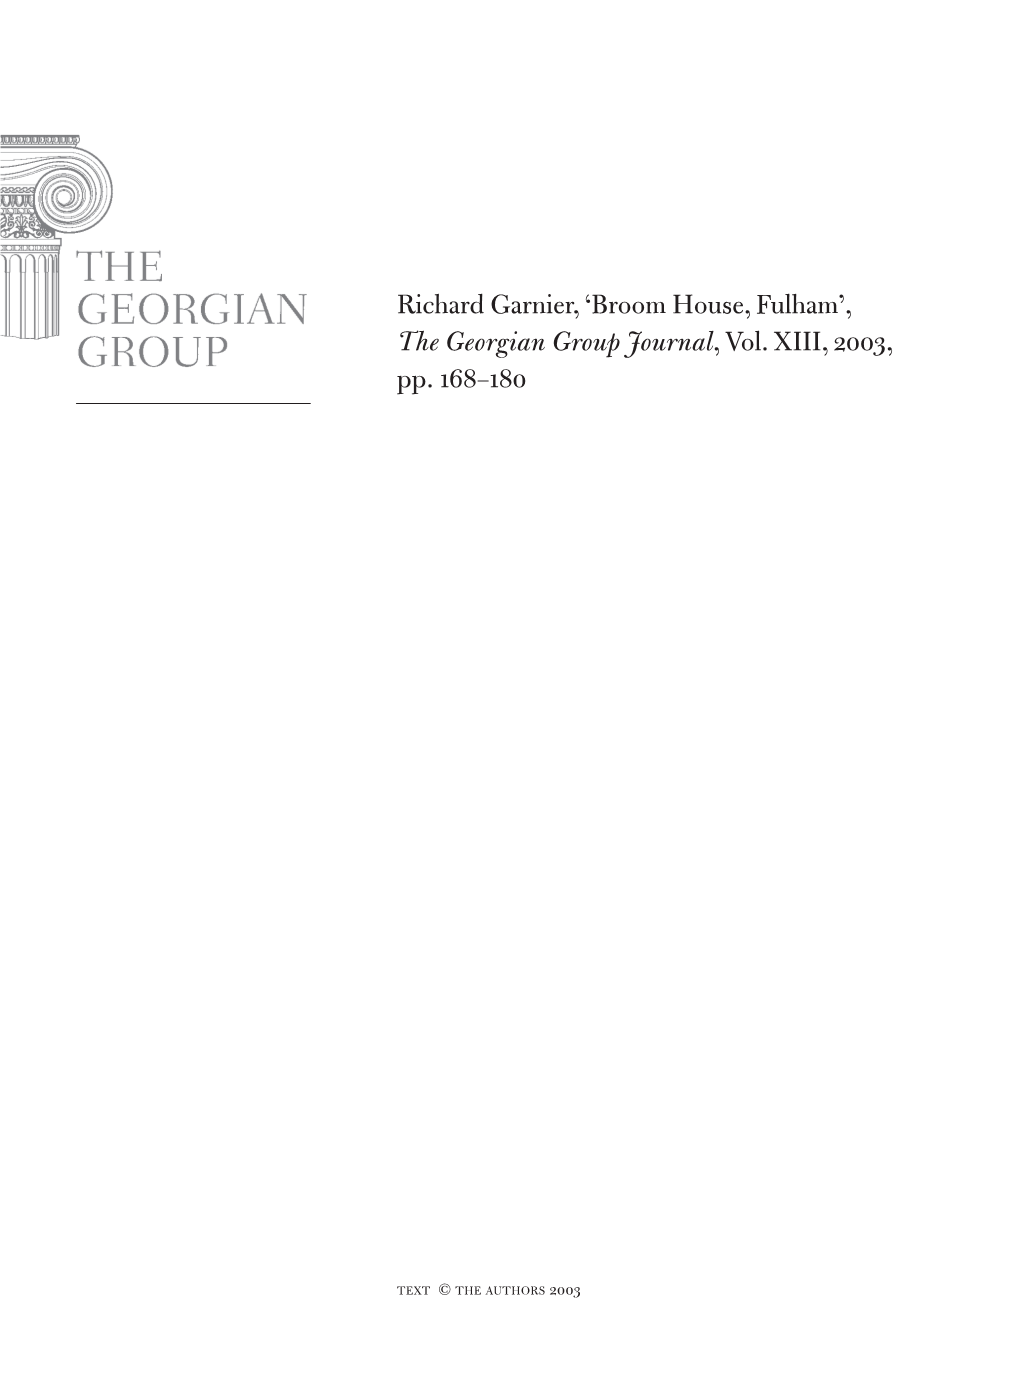 Richard Garnier, 'Broom House, Fulham', the Georgian Group